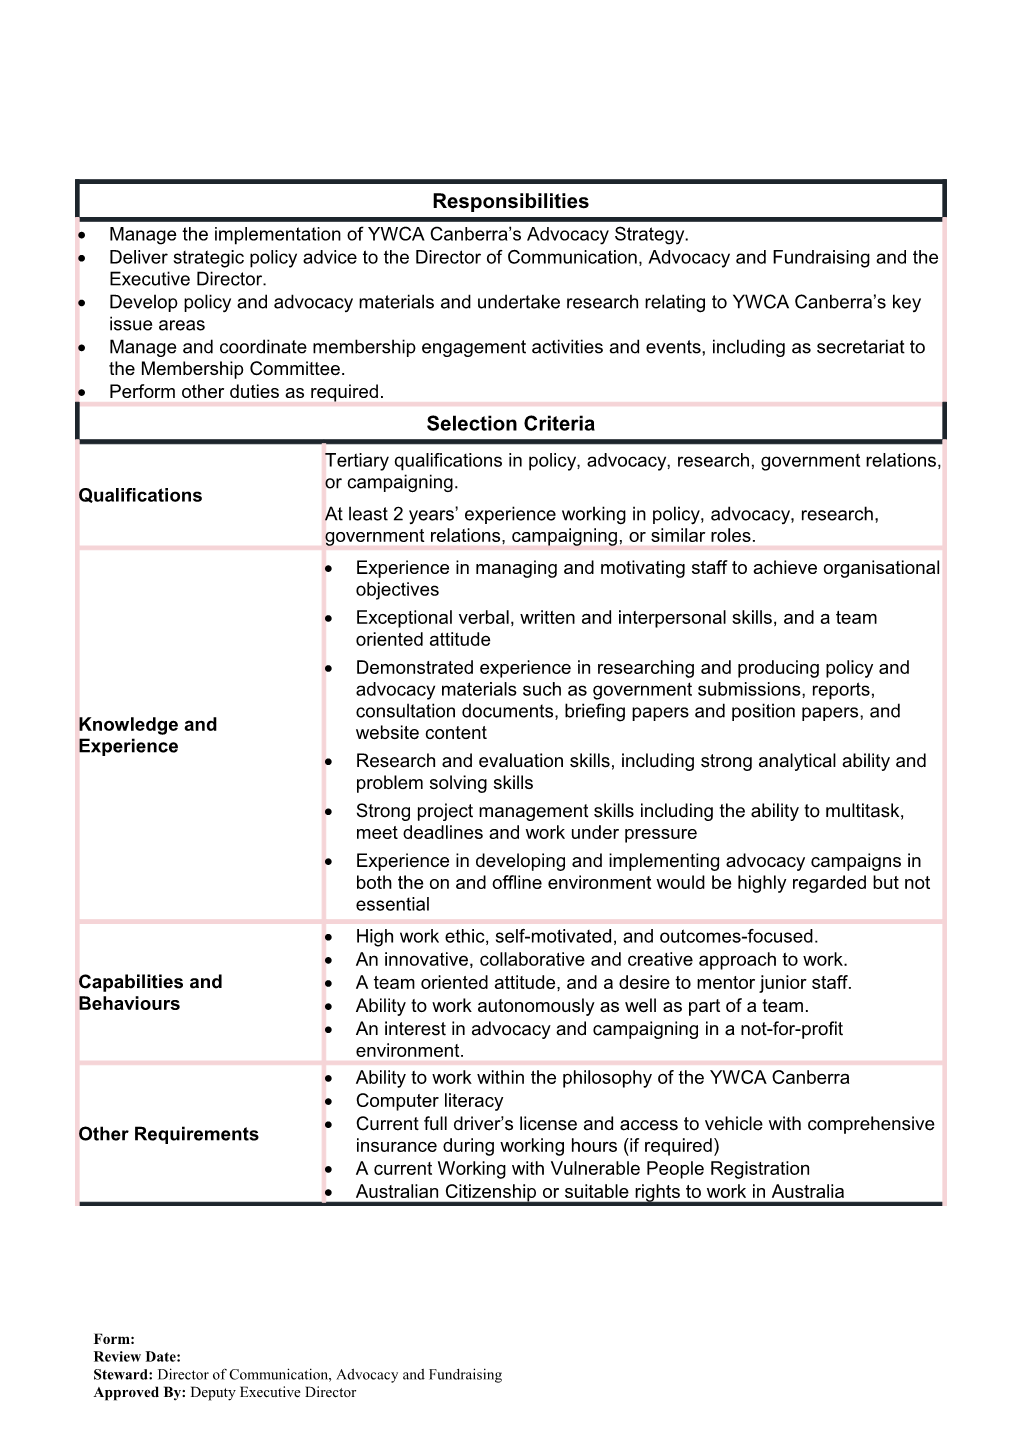 YWCA Canberra Enterprise Agreement 2014 - 17